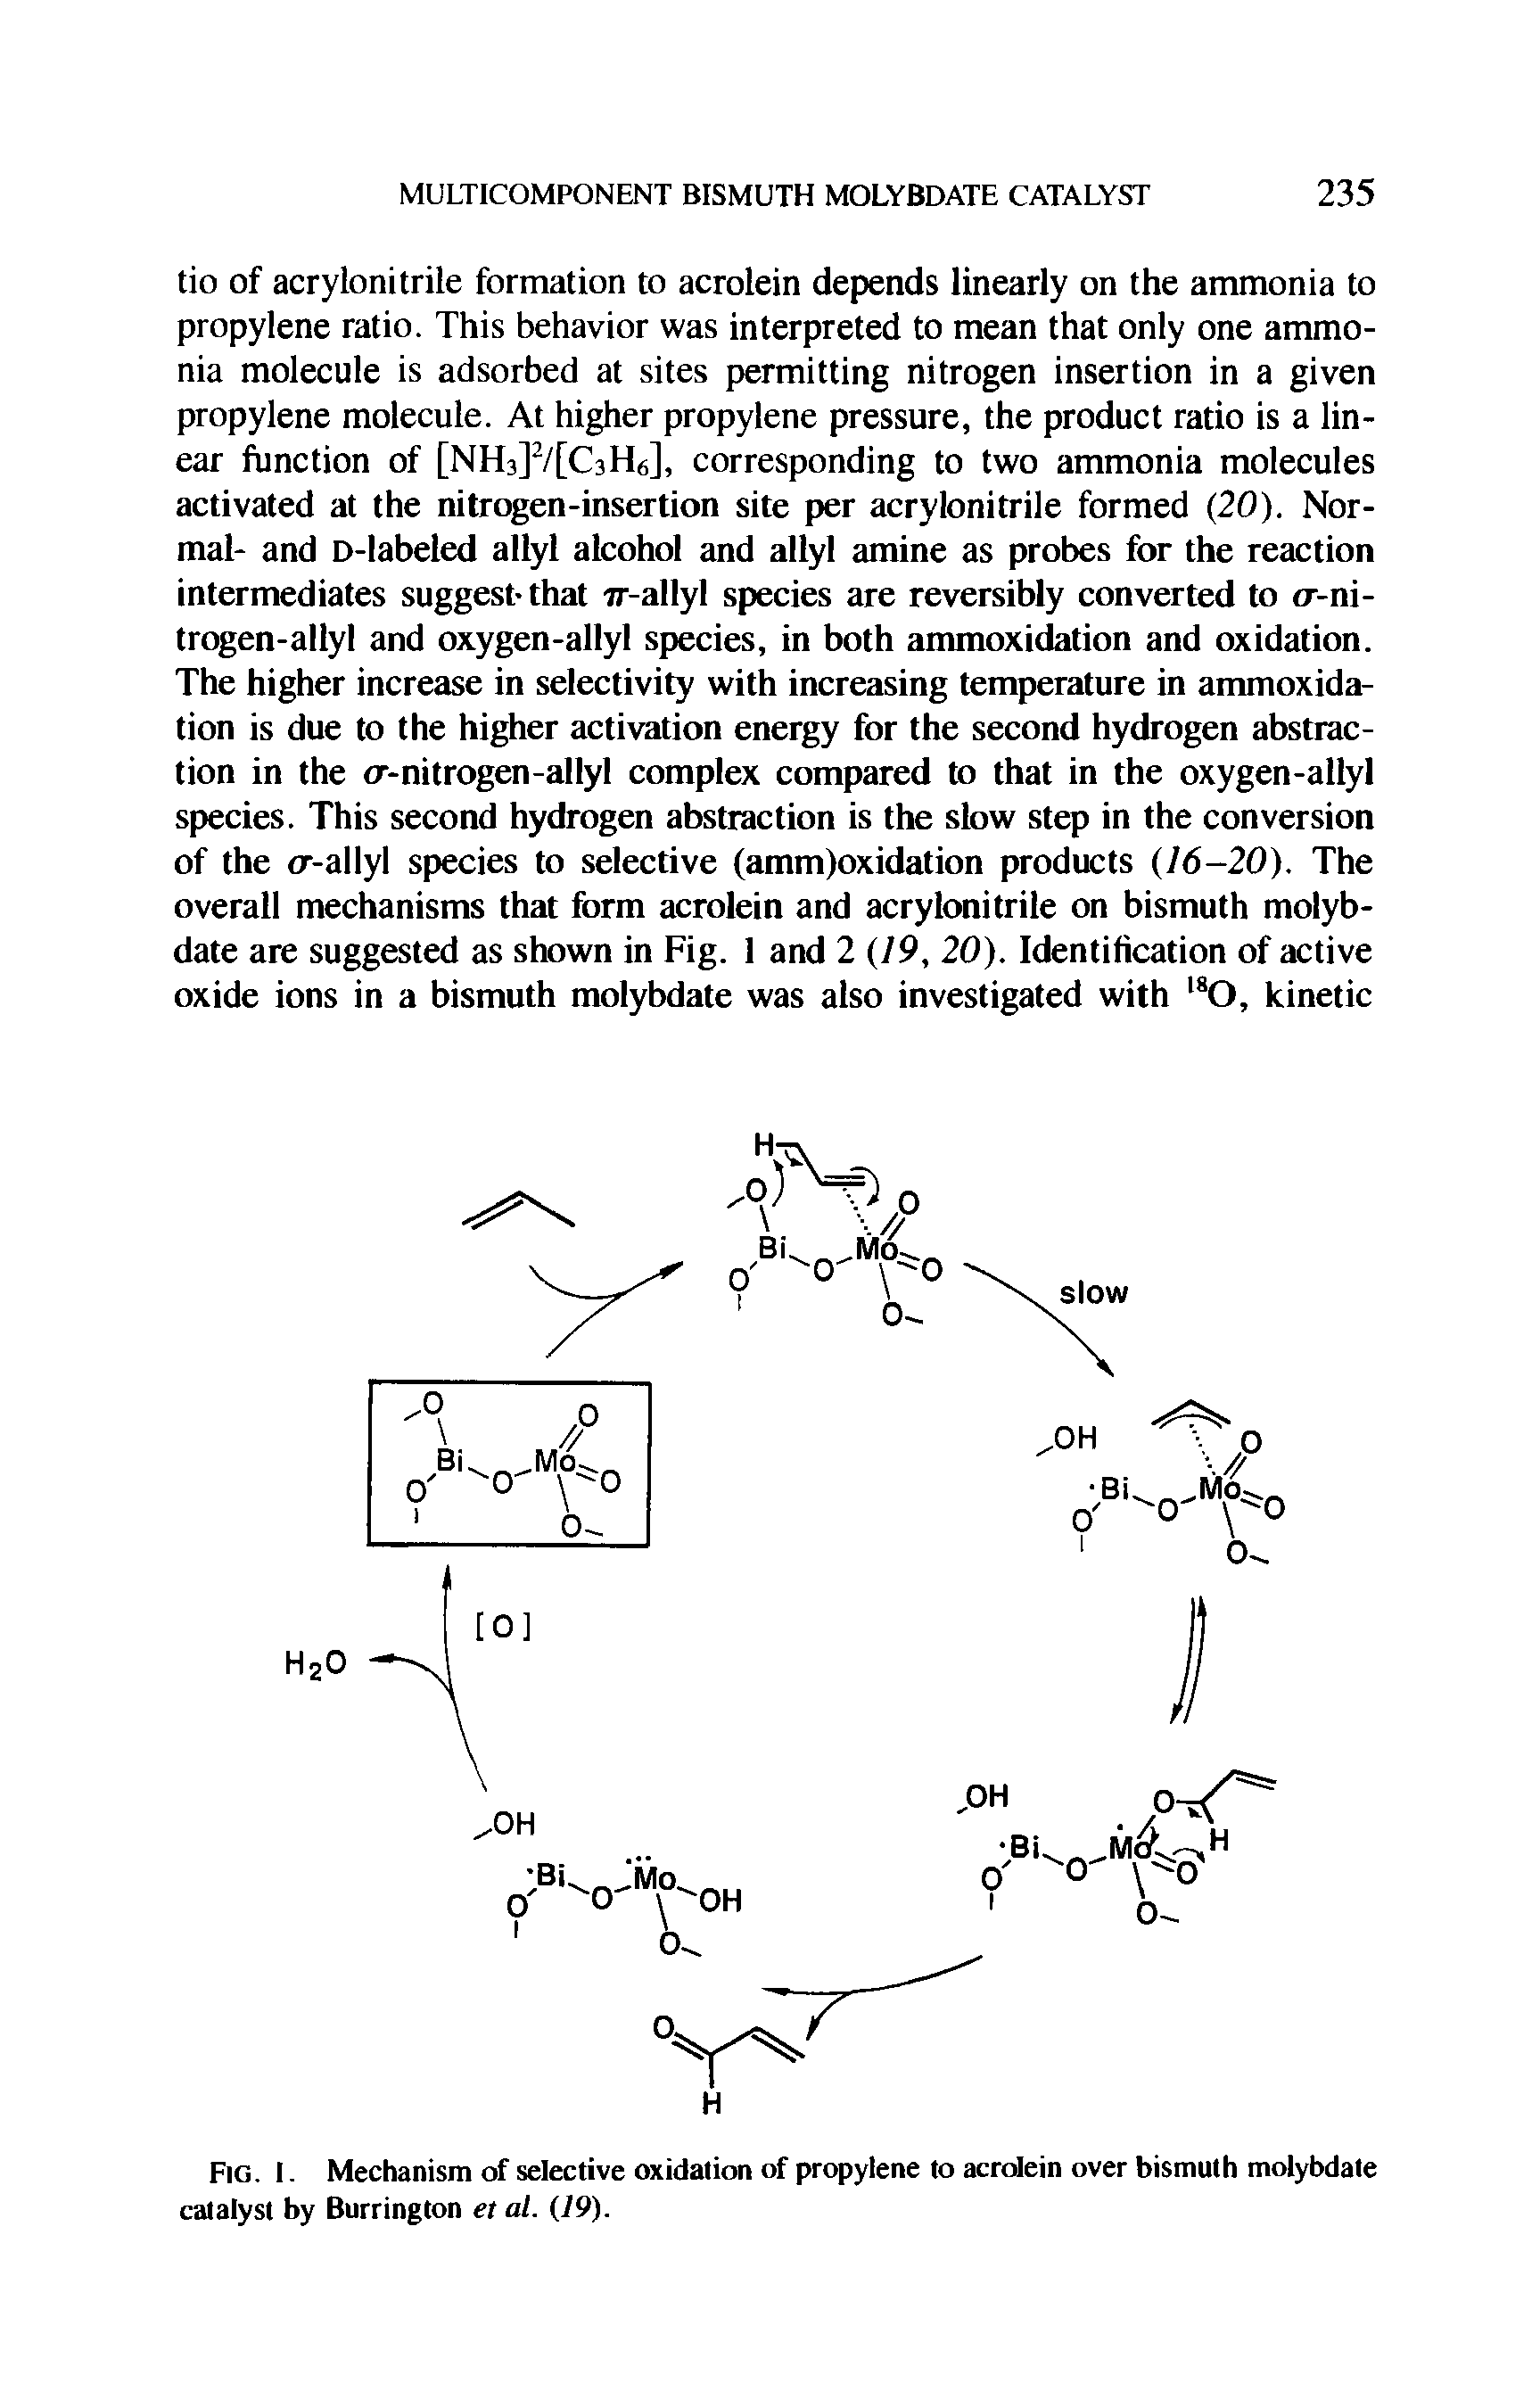 Fig. I. Mechanism of selective oxidation of propylene to acrolein over bismuth molybdate catalyst by Burrington et al. (19).